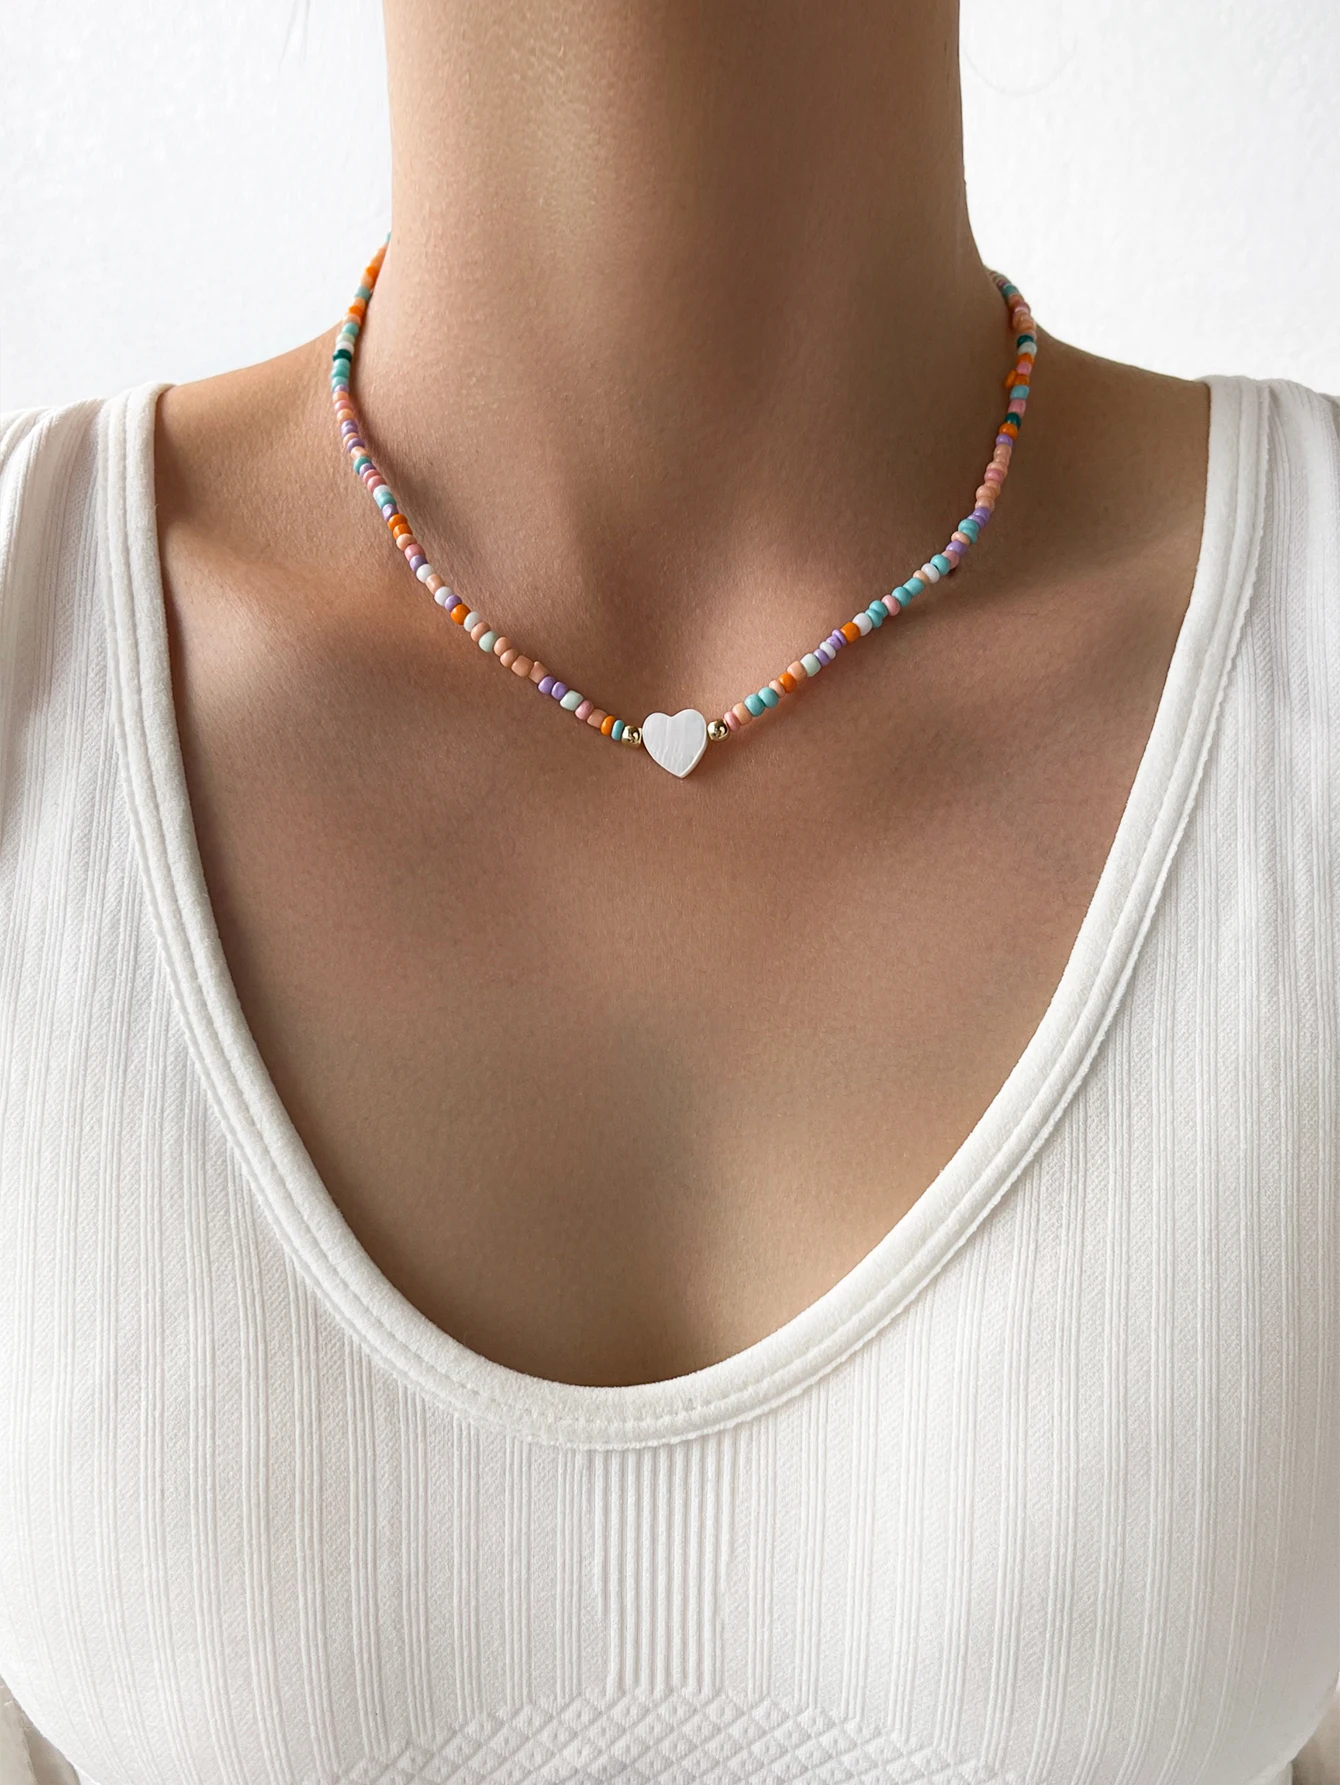 

Stillgirl 1Pc Kpop Cute Multi Color Heart Pendant Necklace for Women Aesthetic Vintage Beaded Chain Female Boho Fashion Jewelry